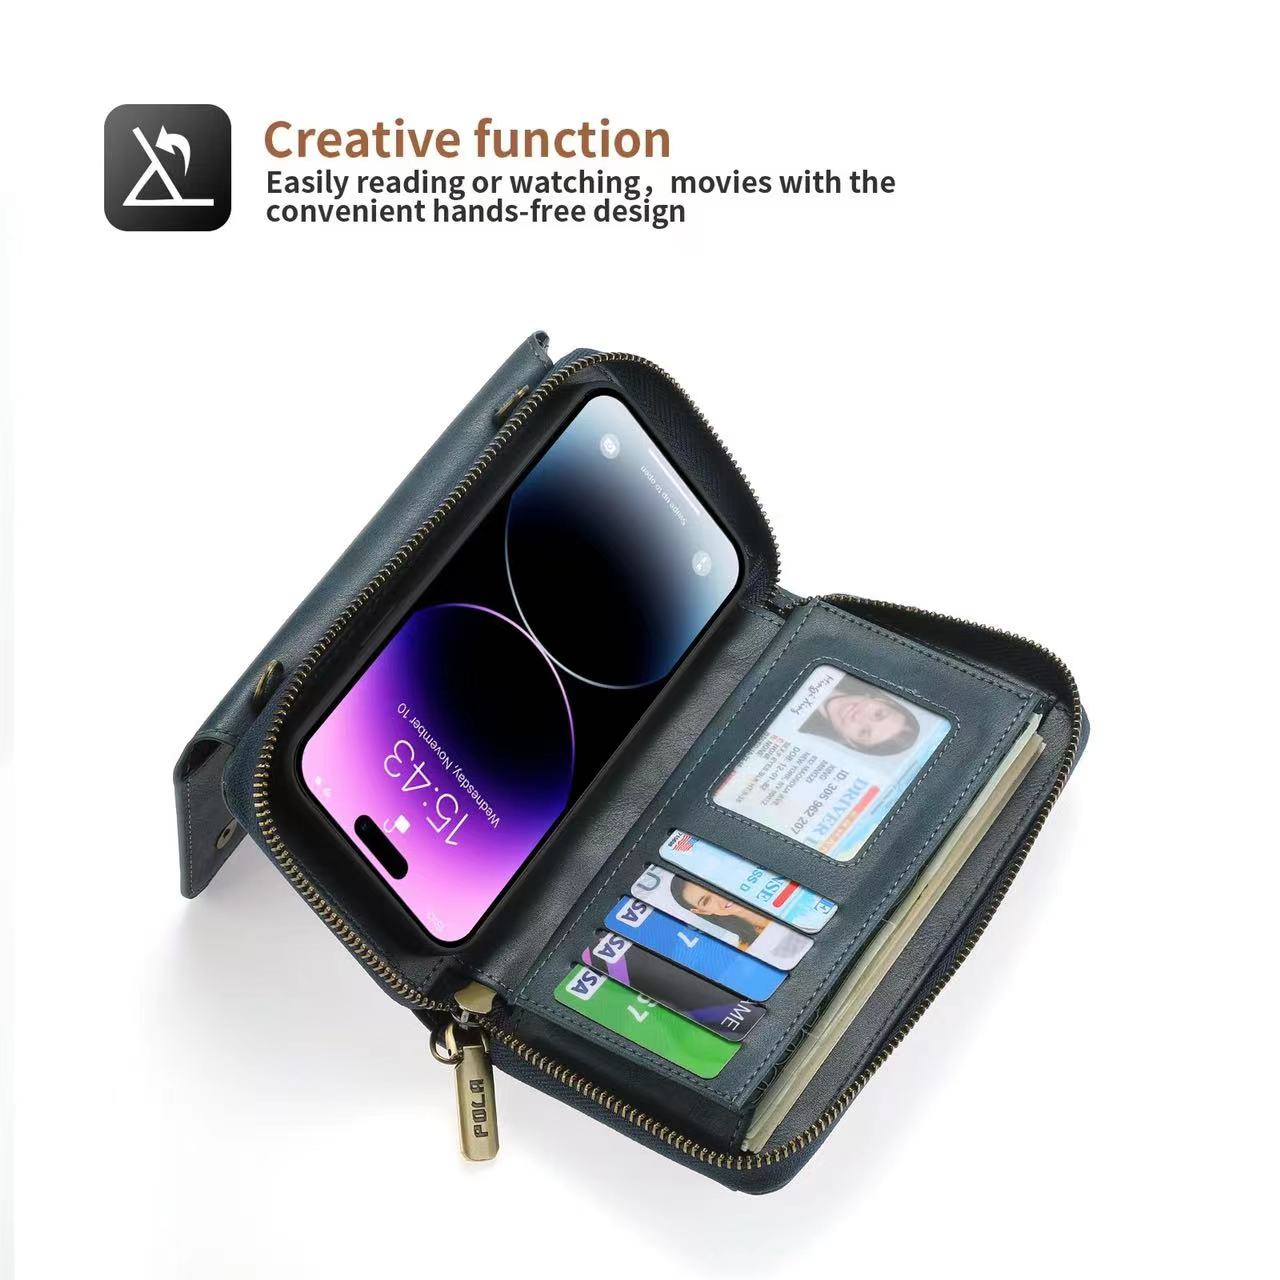 Crossbody Zipper Pocket Card Slot Phone Case - iPhone